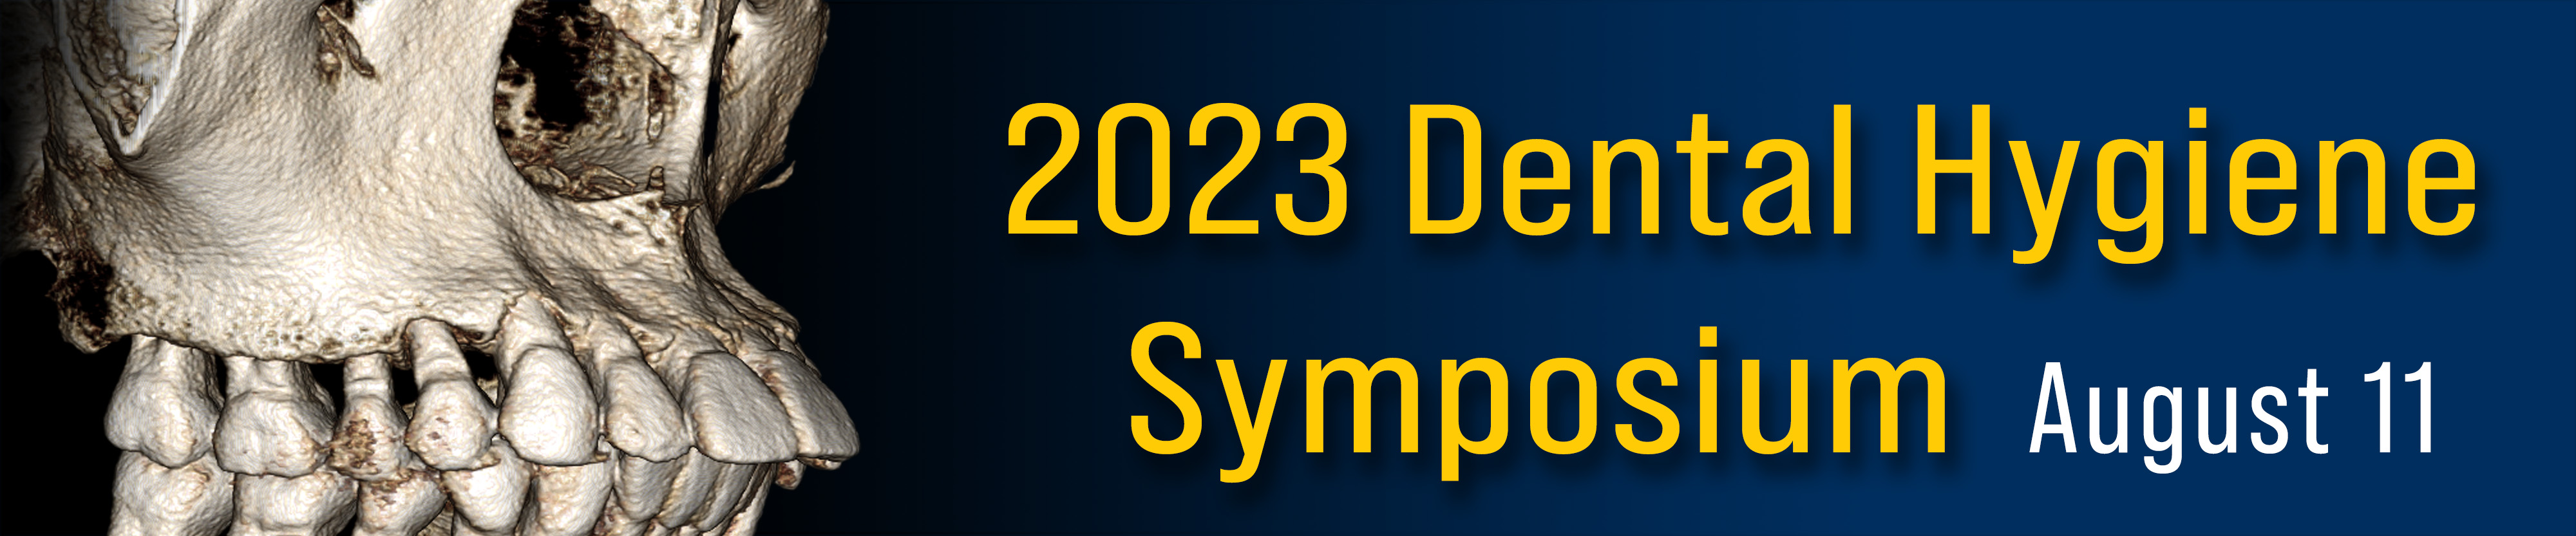 2023 Denta; Hygiene Symposium